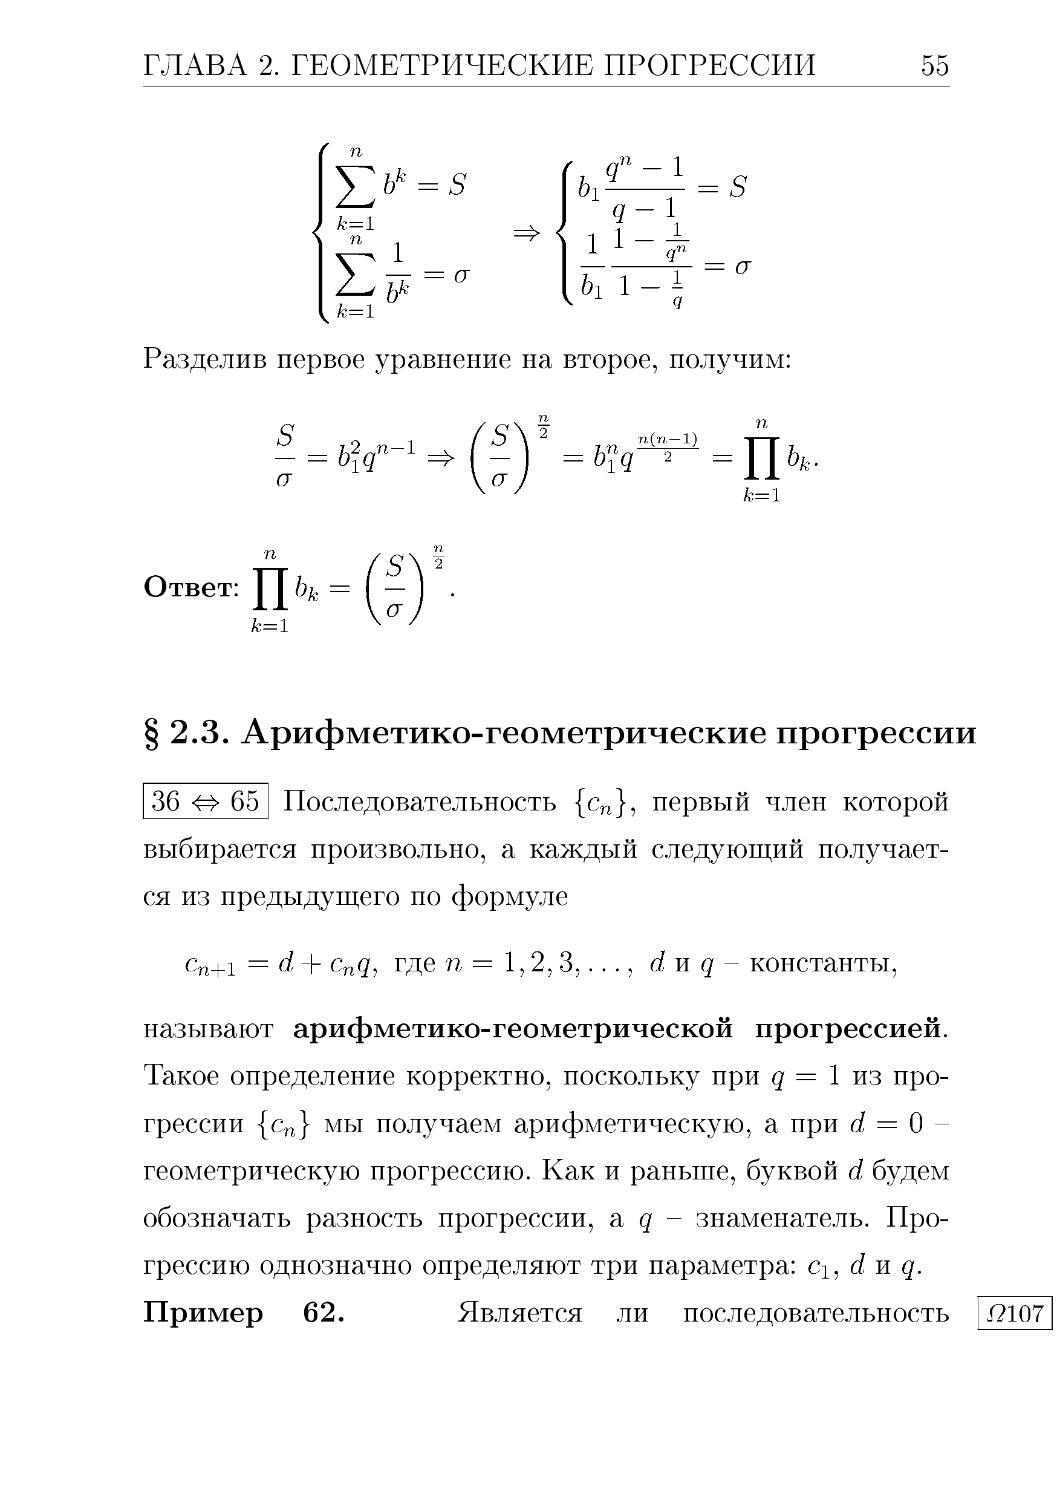 § 2.3. Арифметико-геометрические прогрессии